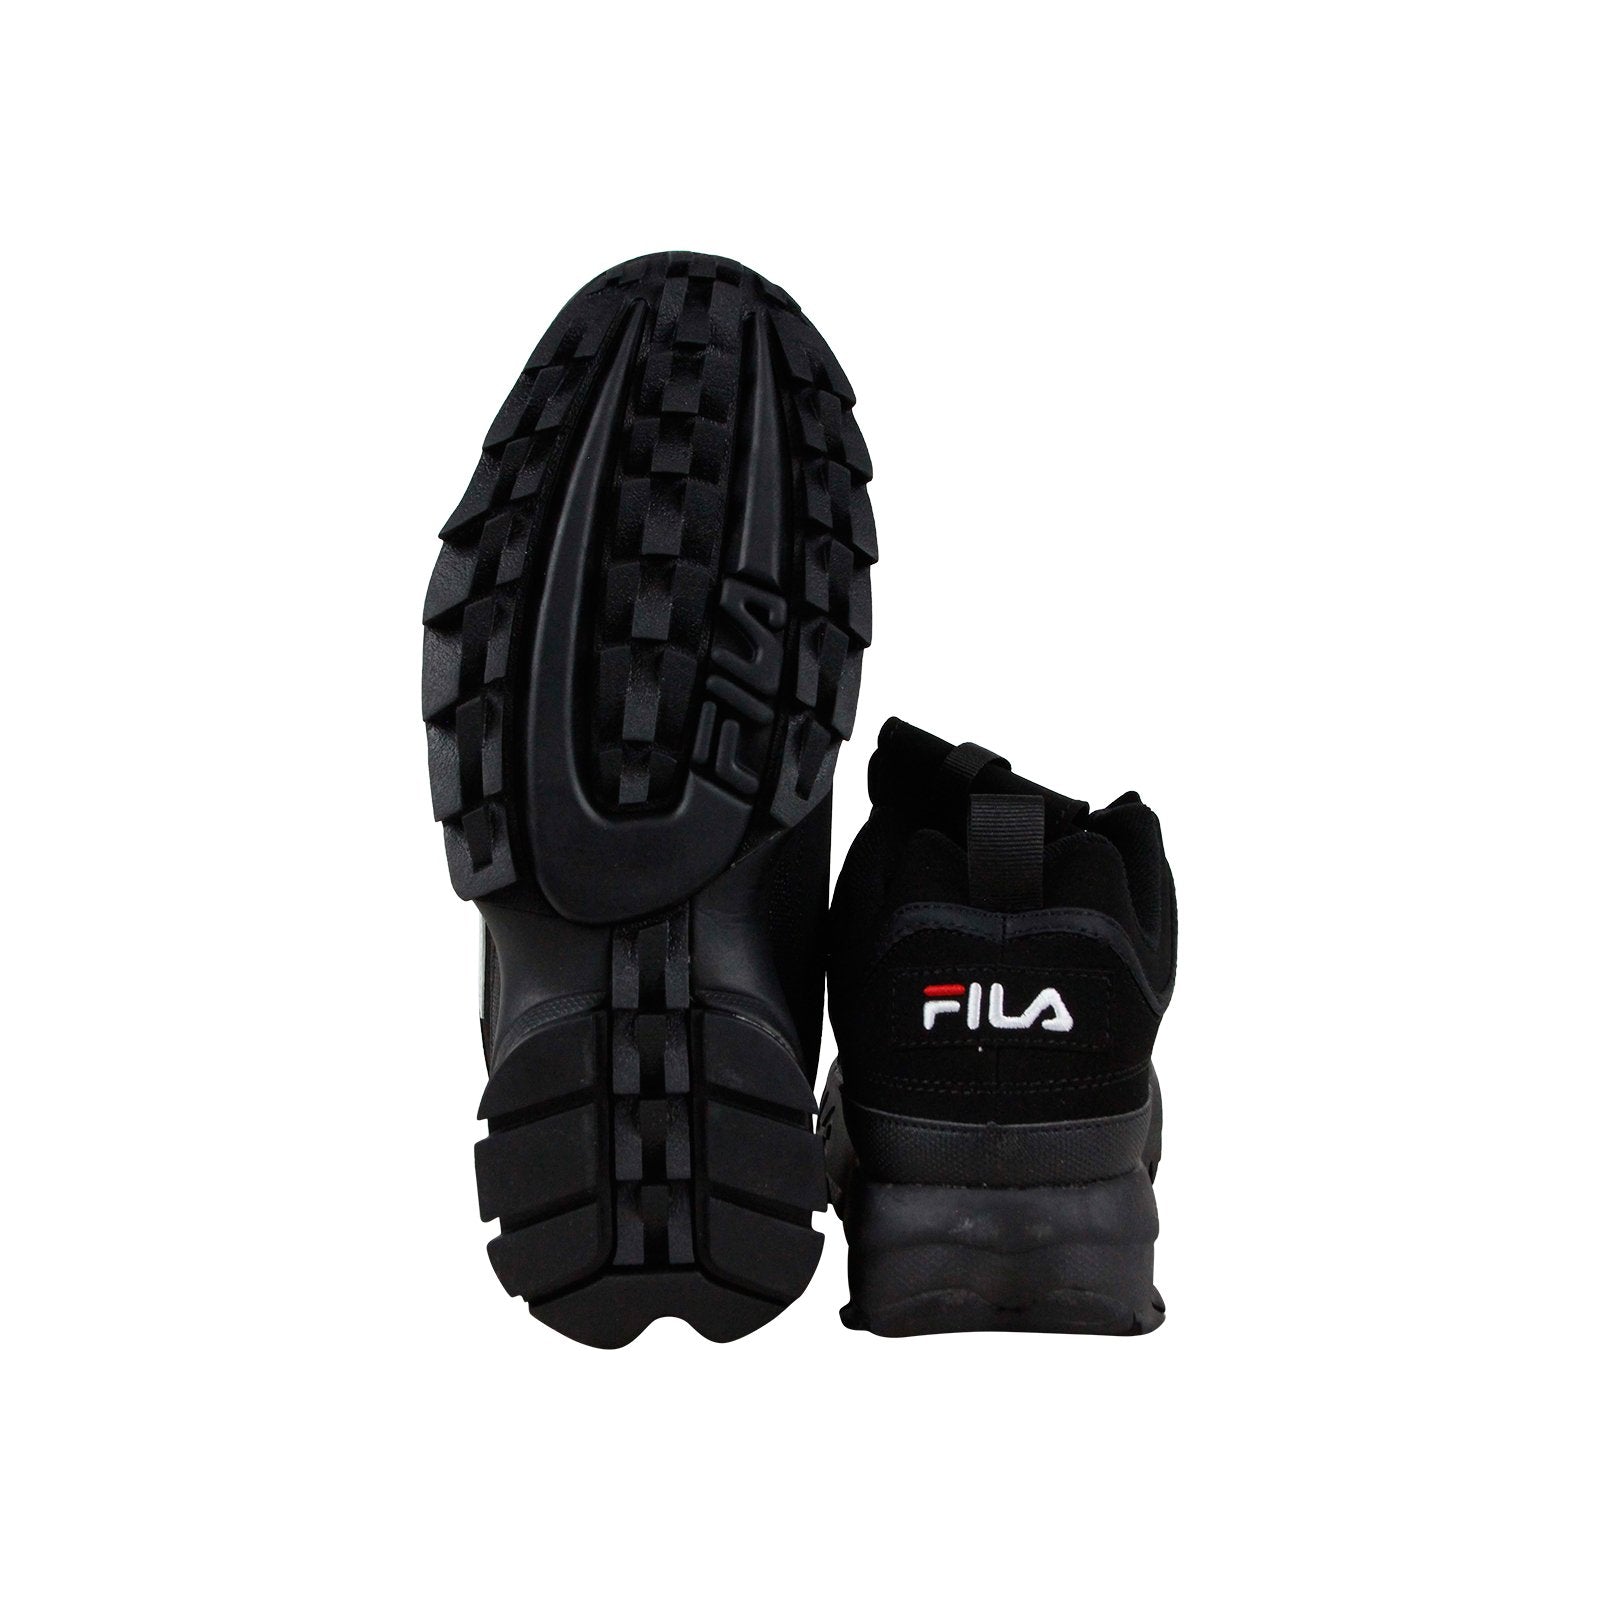 tanker Maladroit Dankbaar Fila Disruptor II FW01653-018 Mens Black Suede Low Top Lifestyle Sneak -  Ruze Shoes